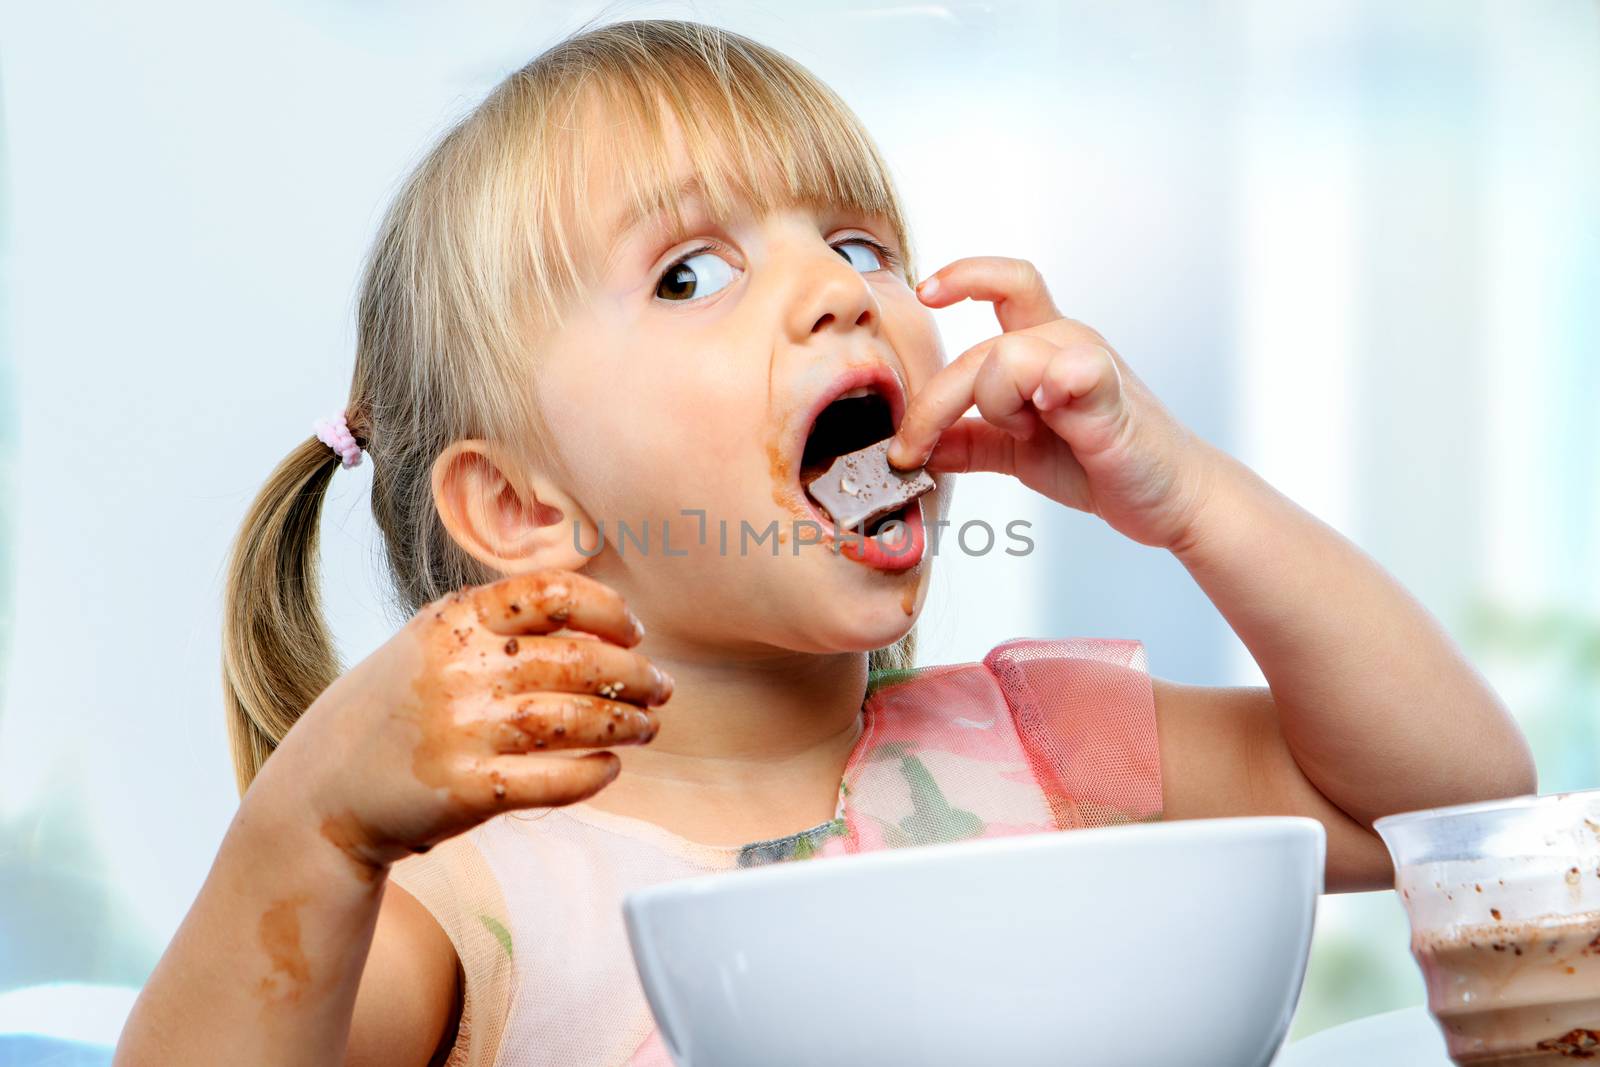 Little girl eating chocolate breakfast. by karelnoppe